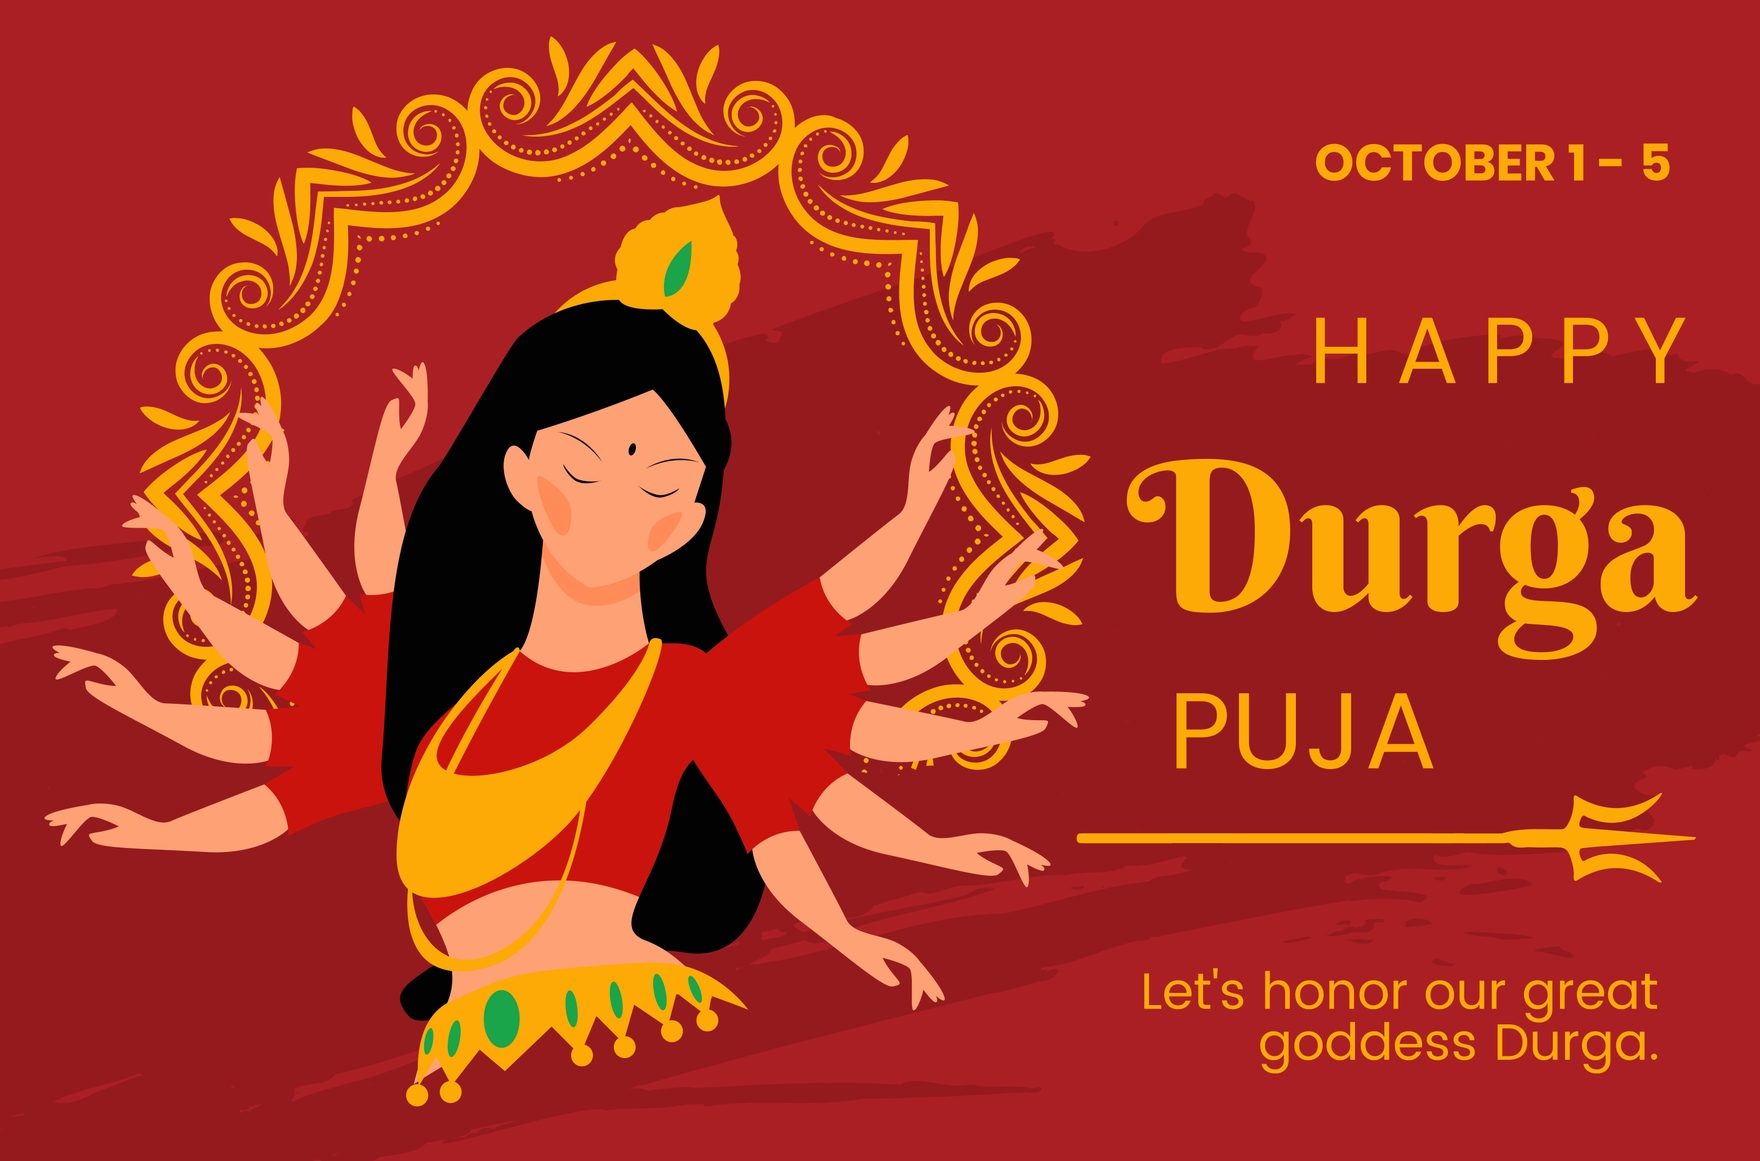 Happy Durga Puja Banner in Illustrator, PSD, EPS, SVG, JPG, PNG